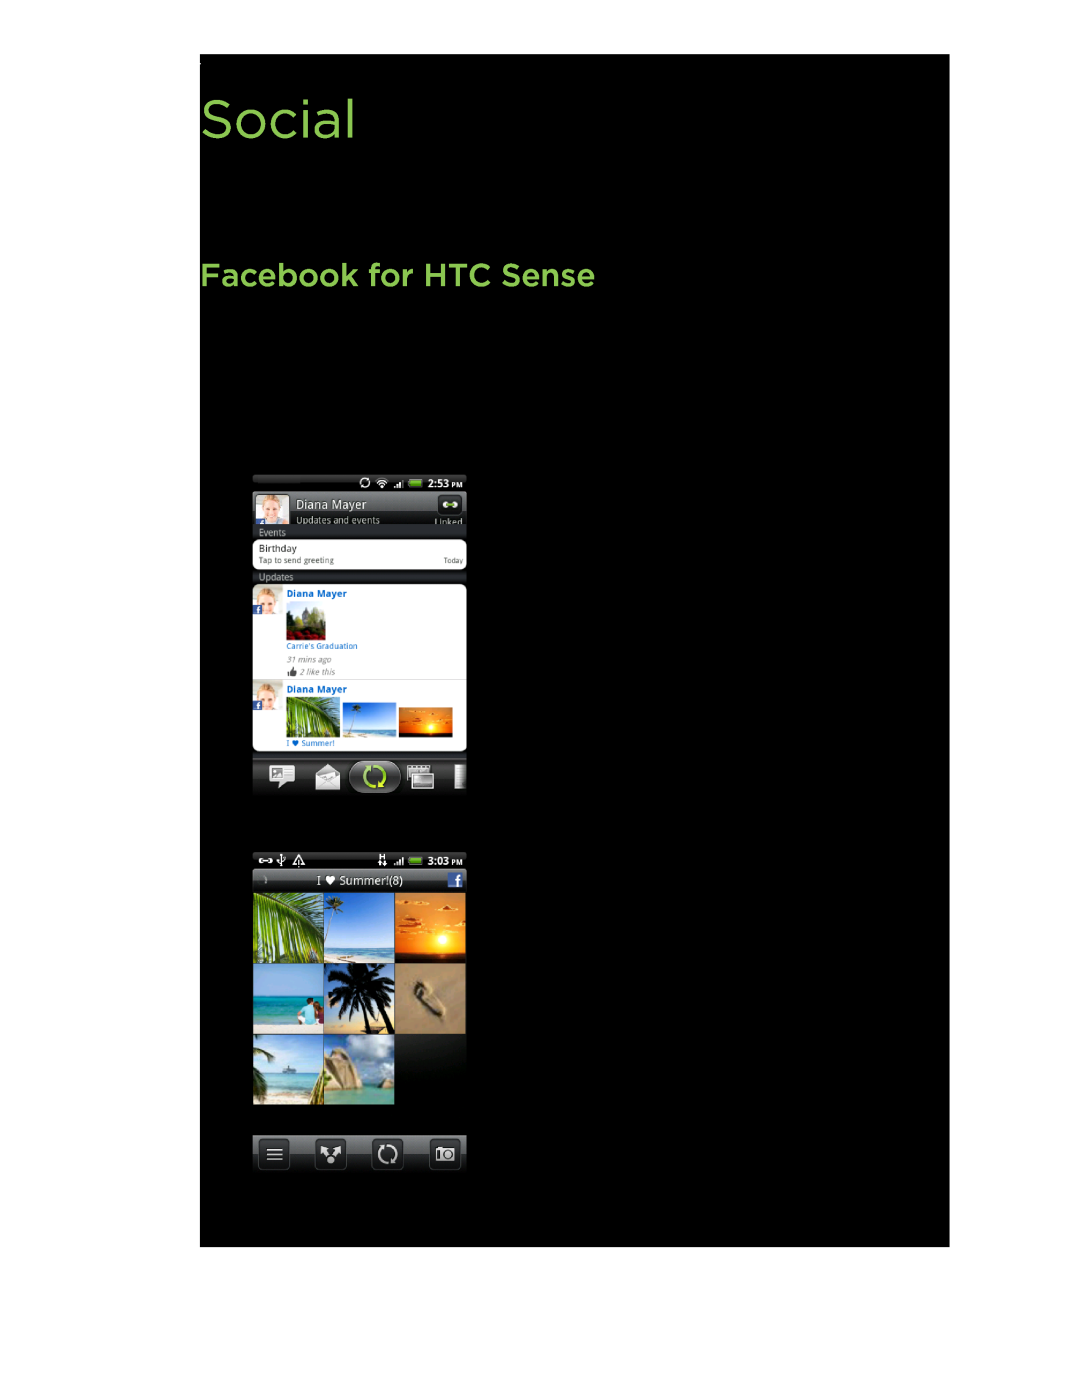 HTC manual Social, Facebook for HTC Sense 